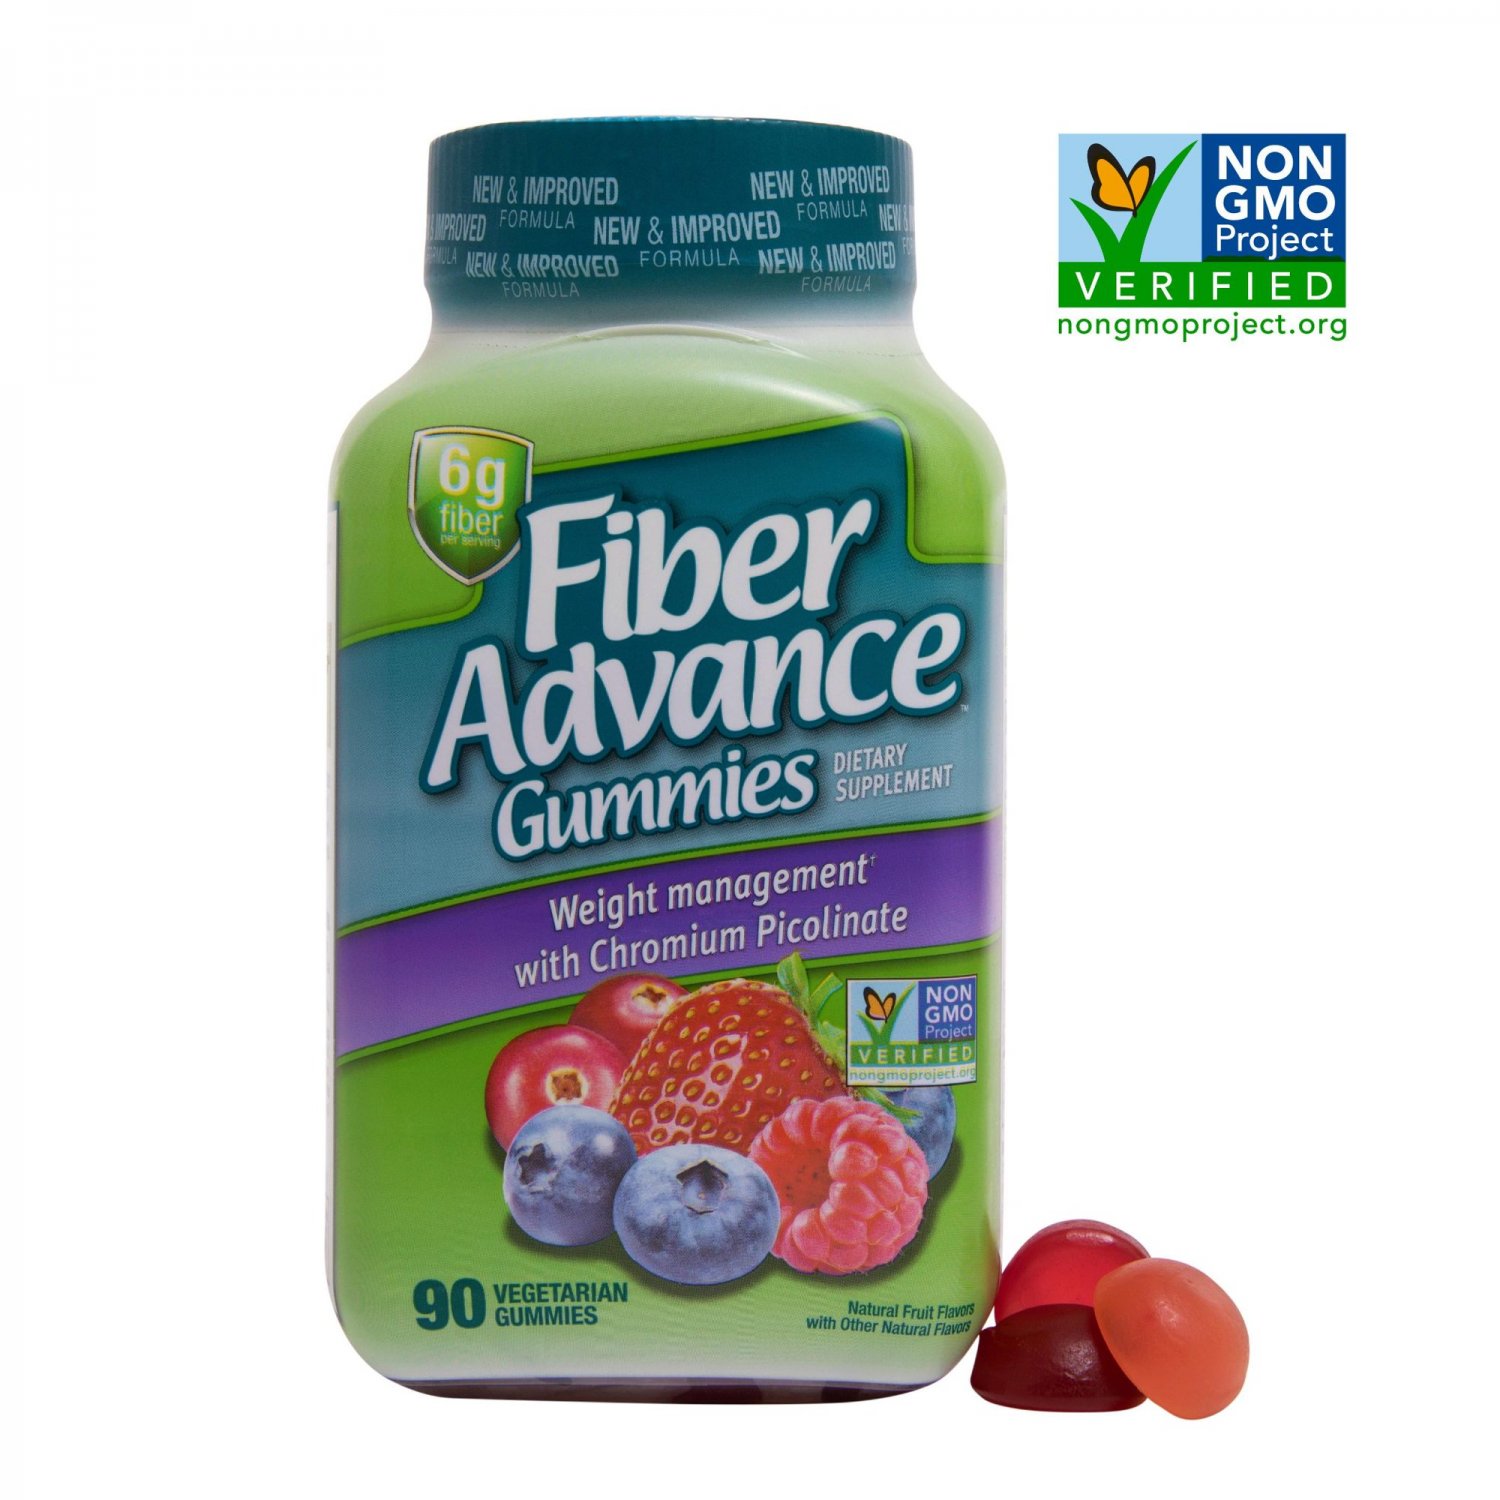 Fiber Advance Daily Fiber 6g, Prebiotic Fiber, Dietary Supplement 90 Gummies